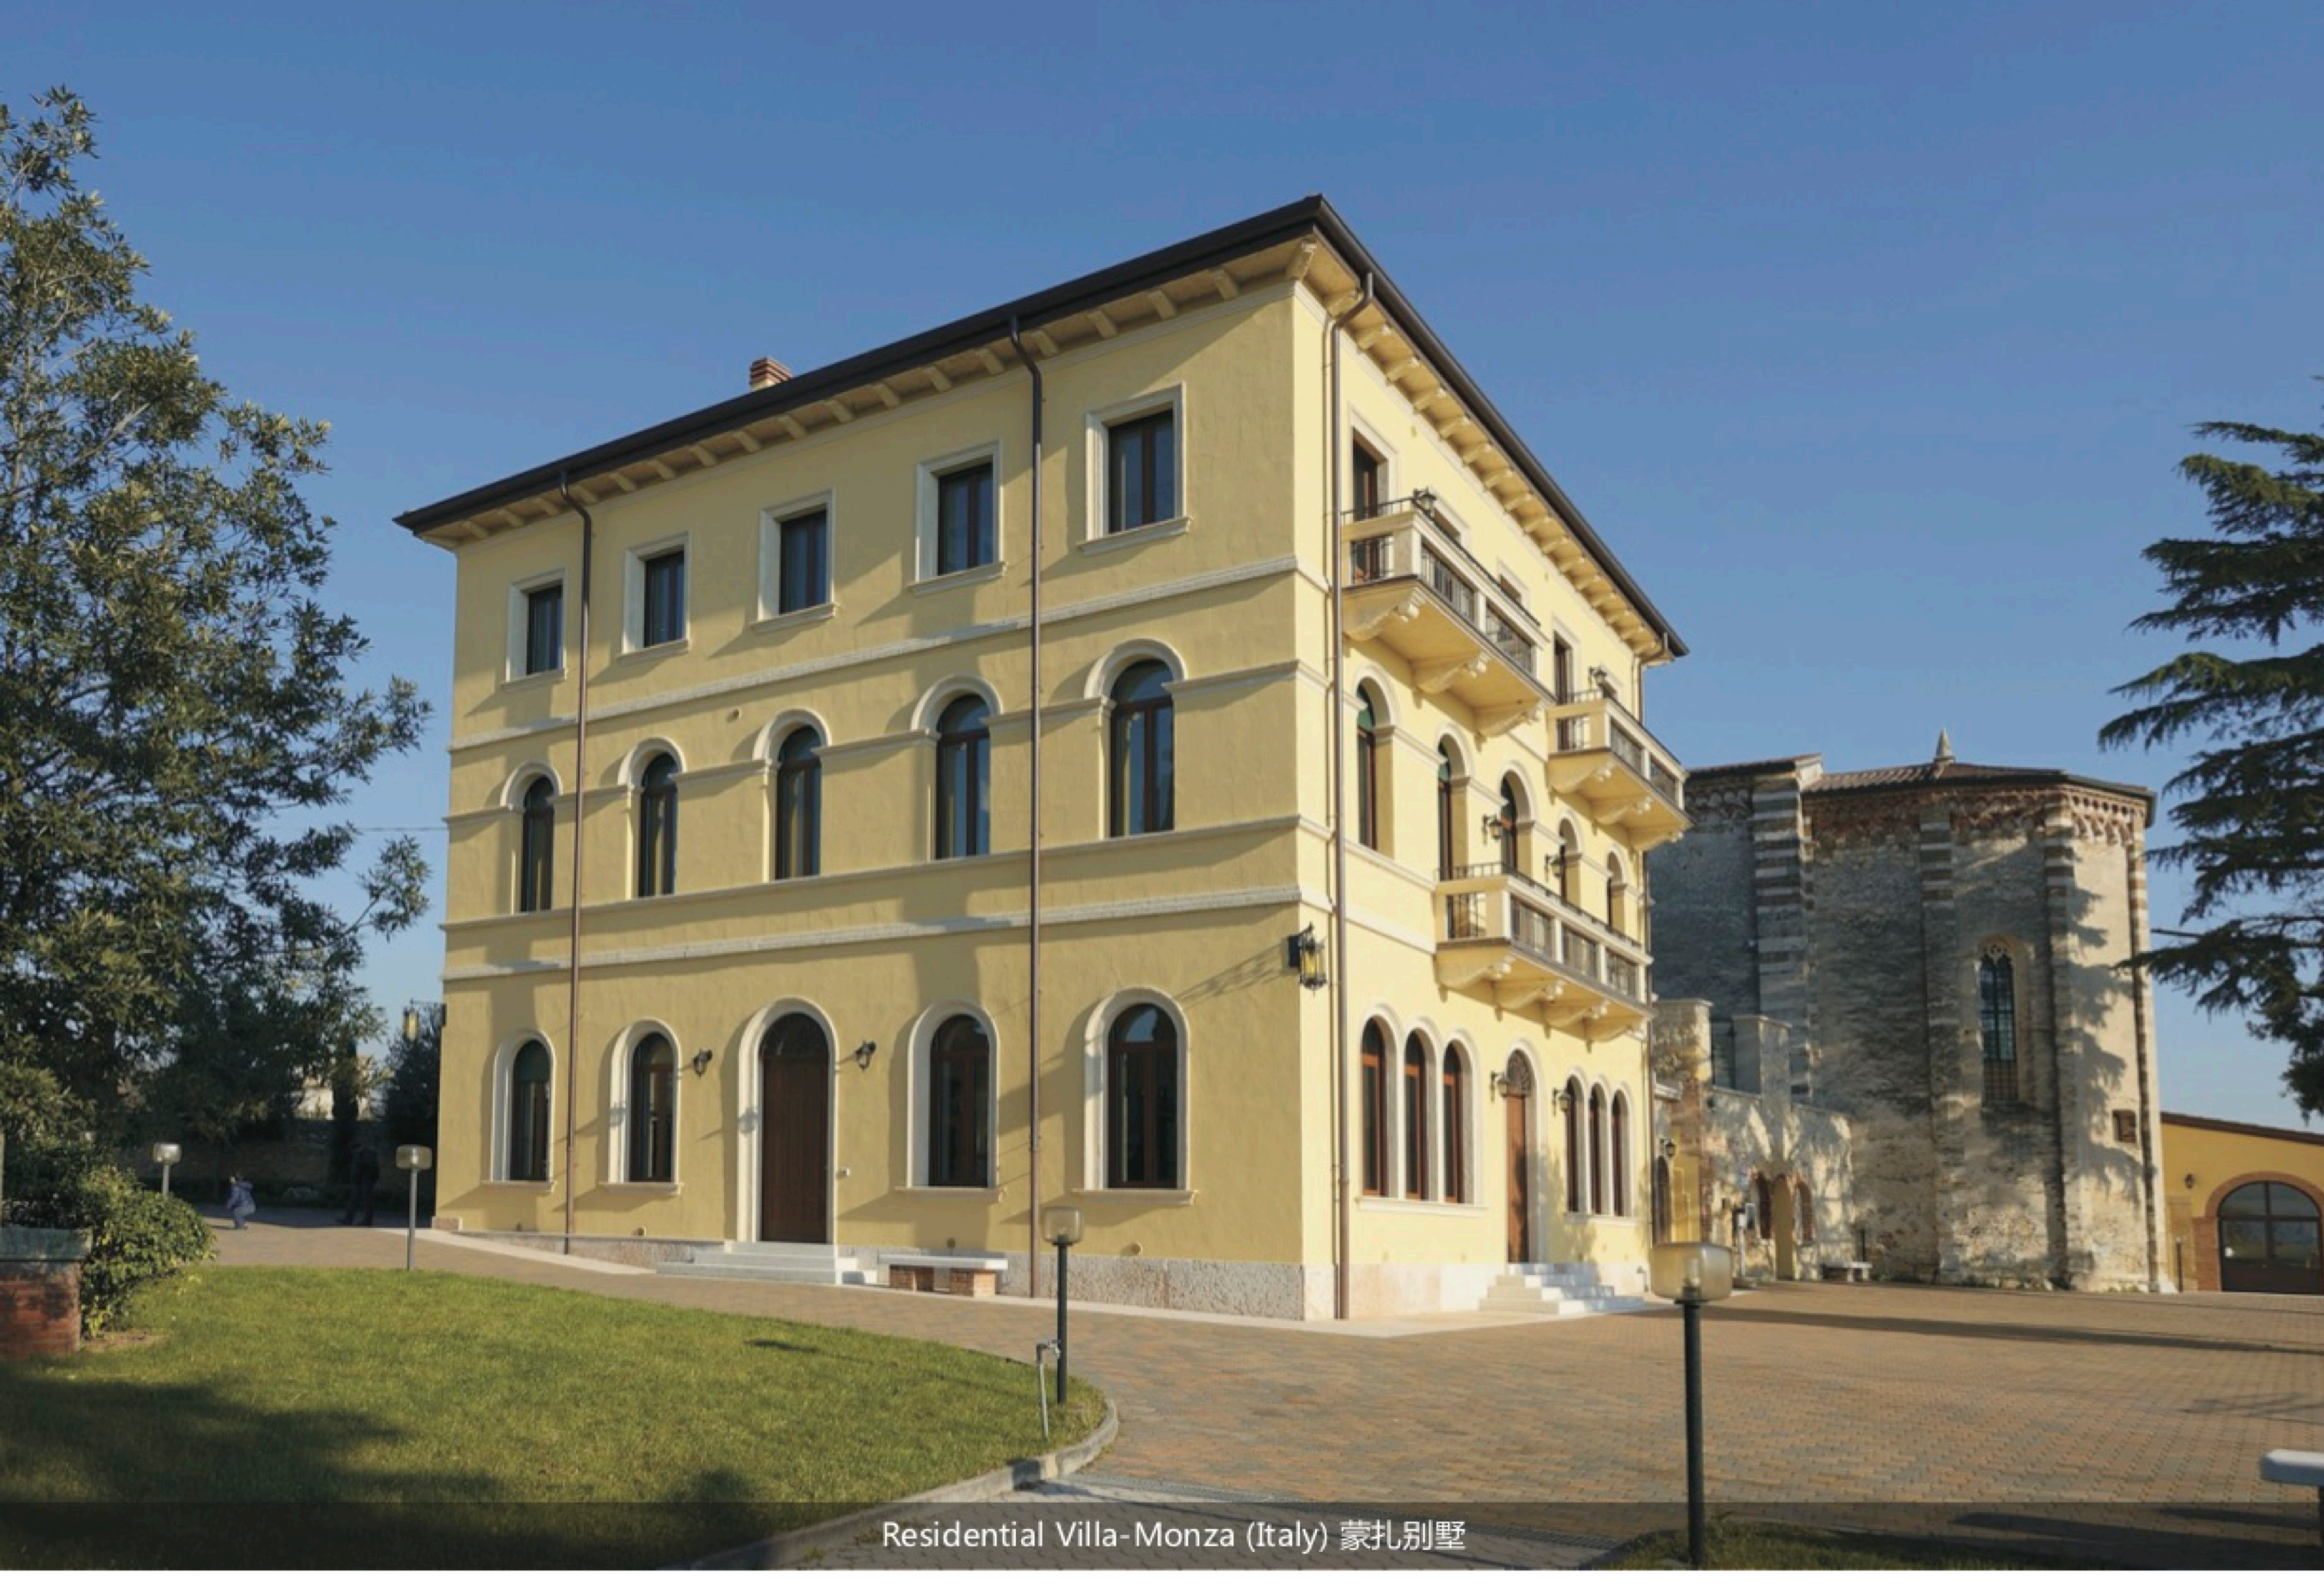  Residential Villa-Monza (Italy）